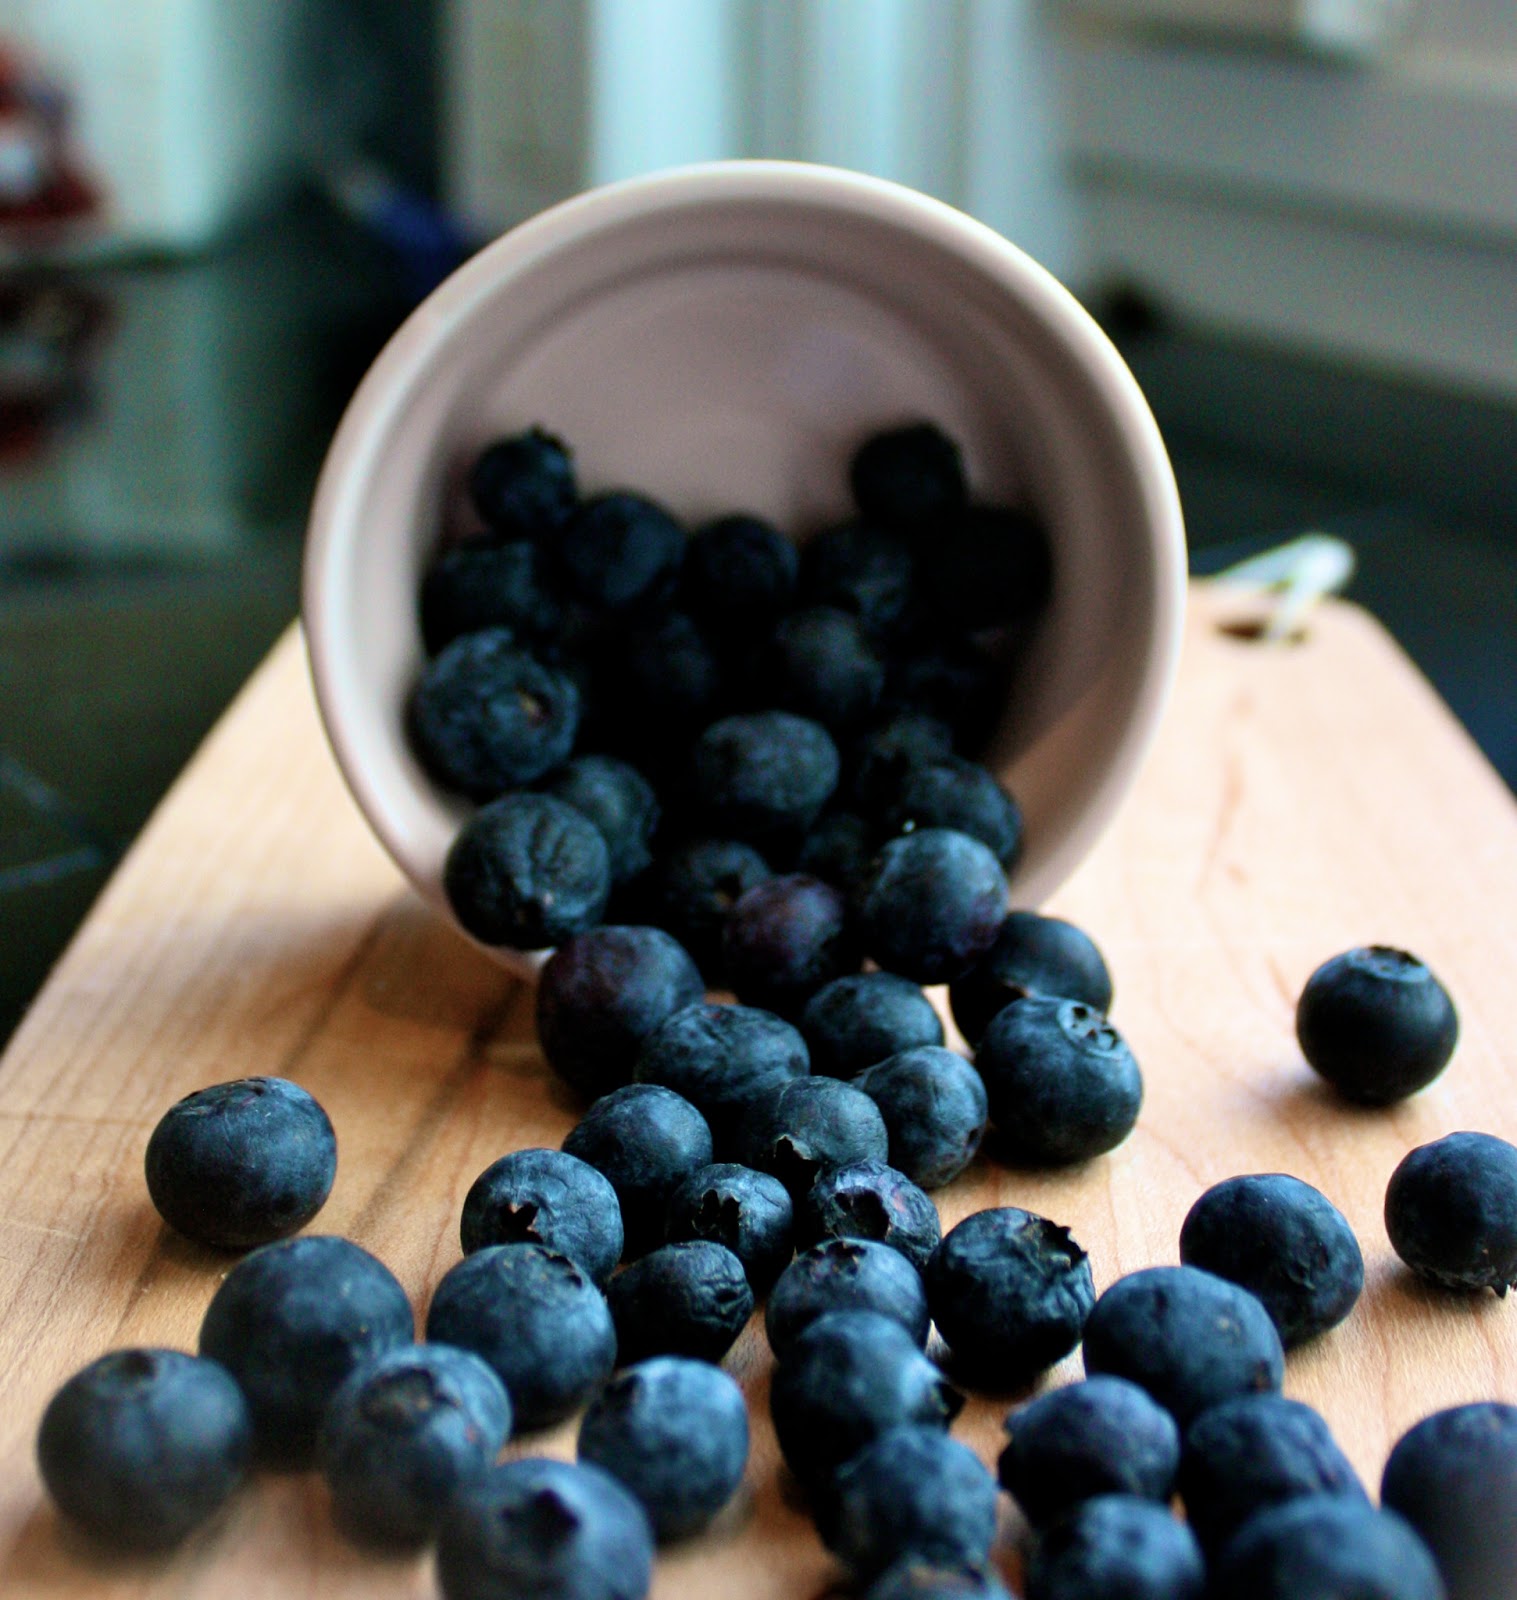 Raspberry beside blueberries photo